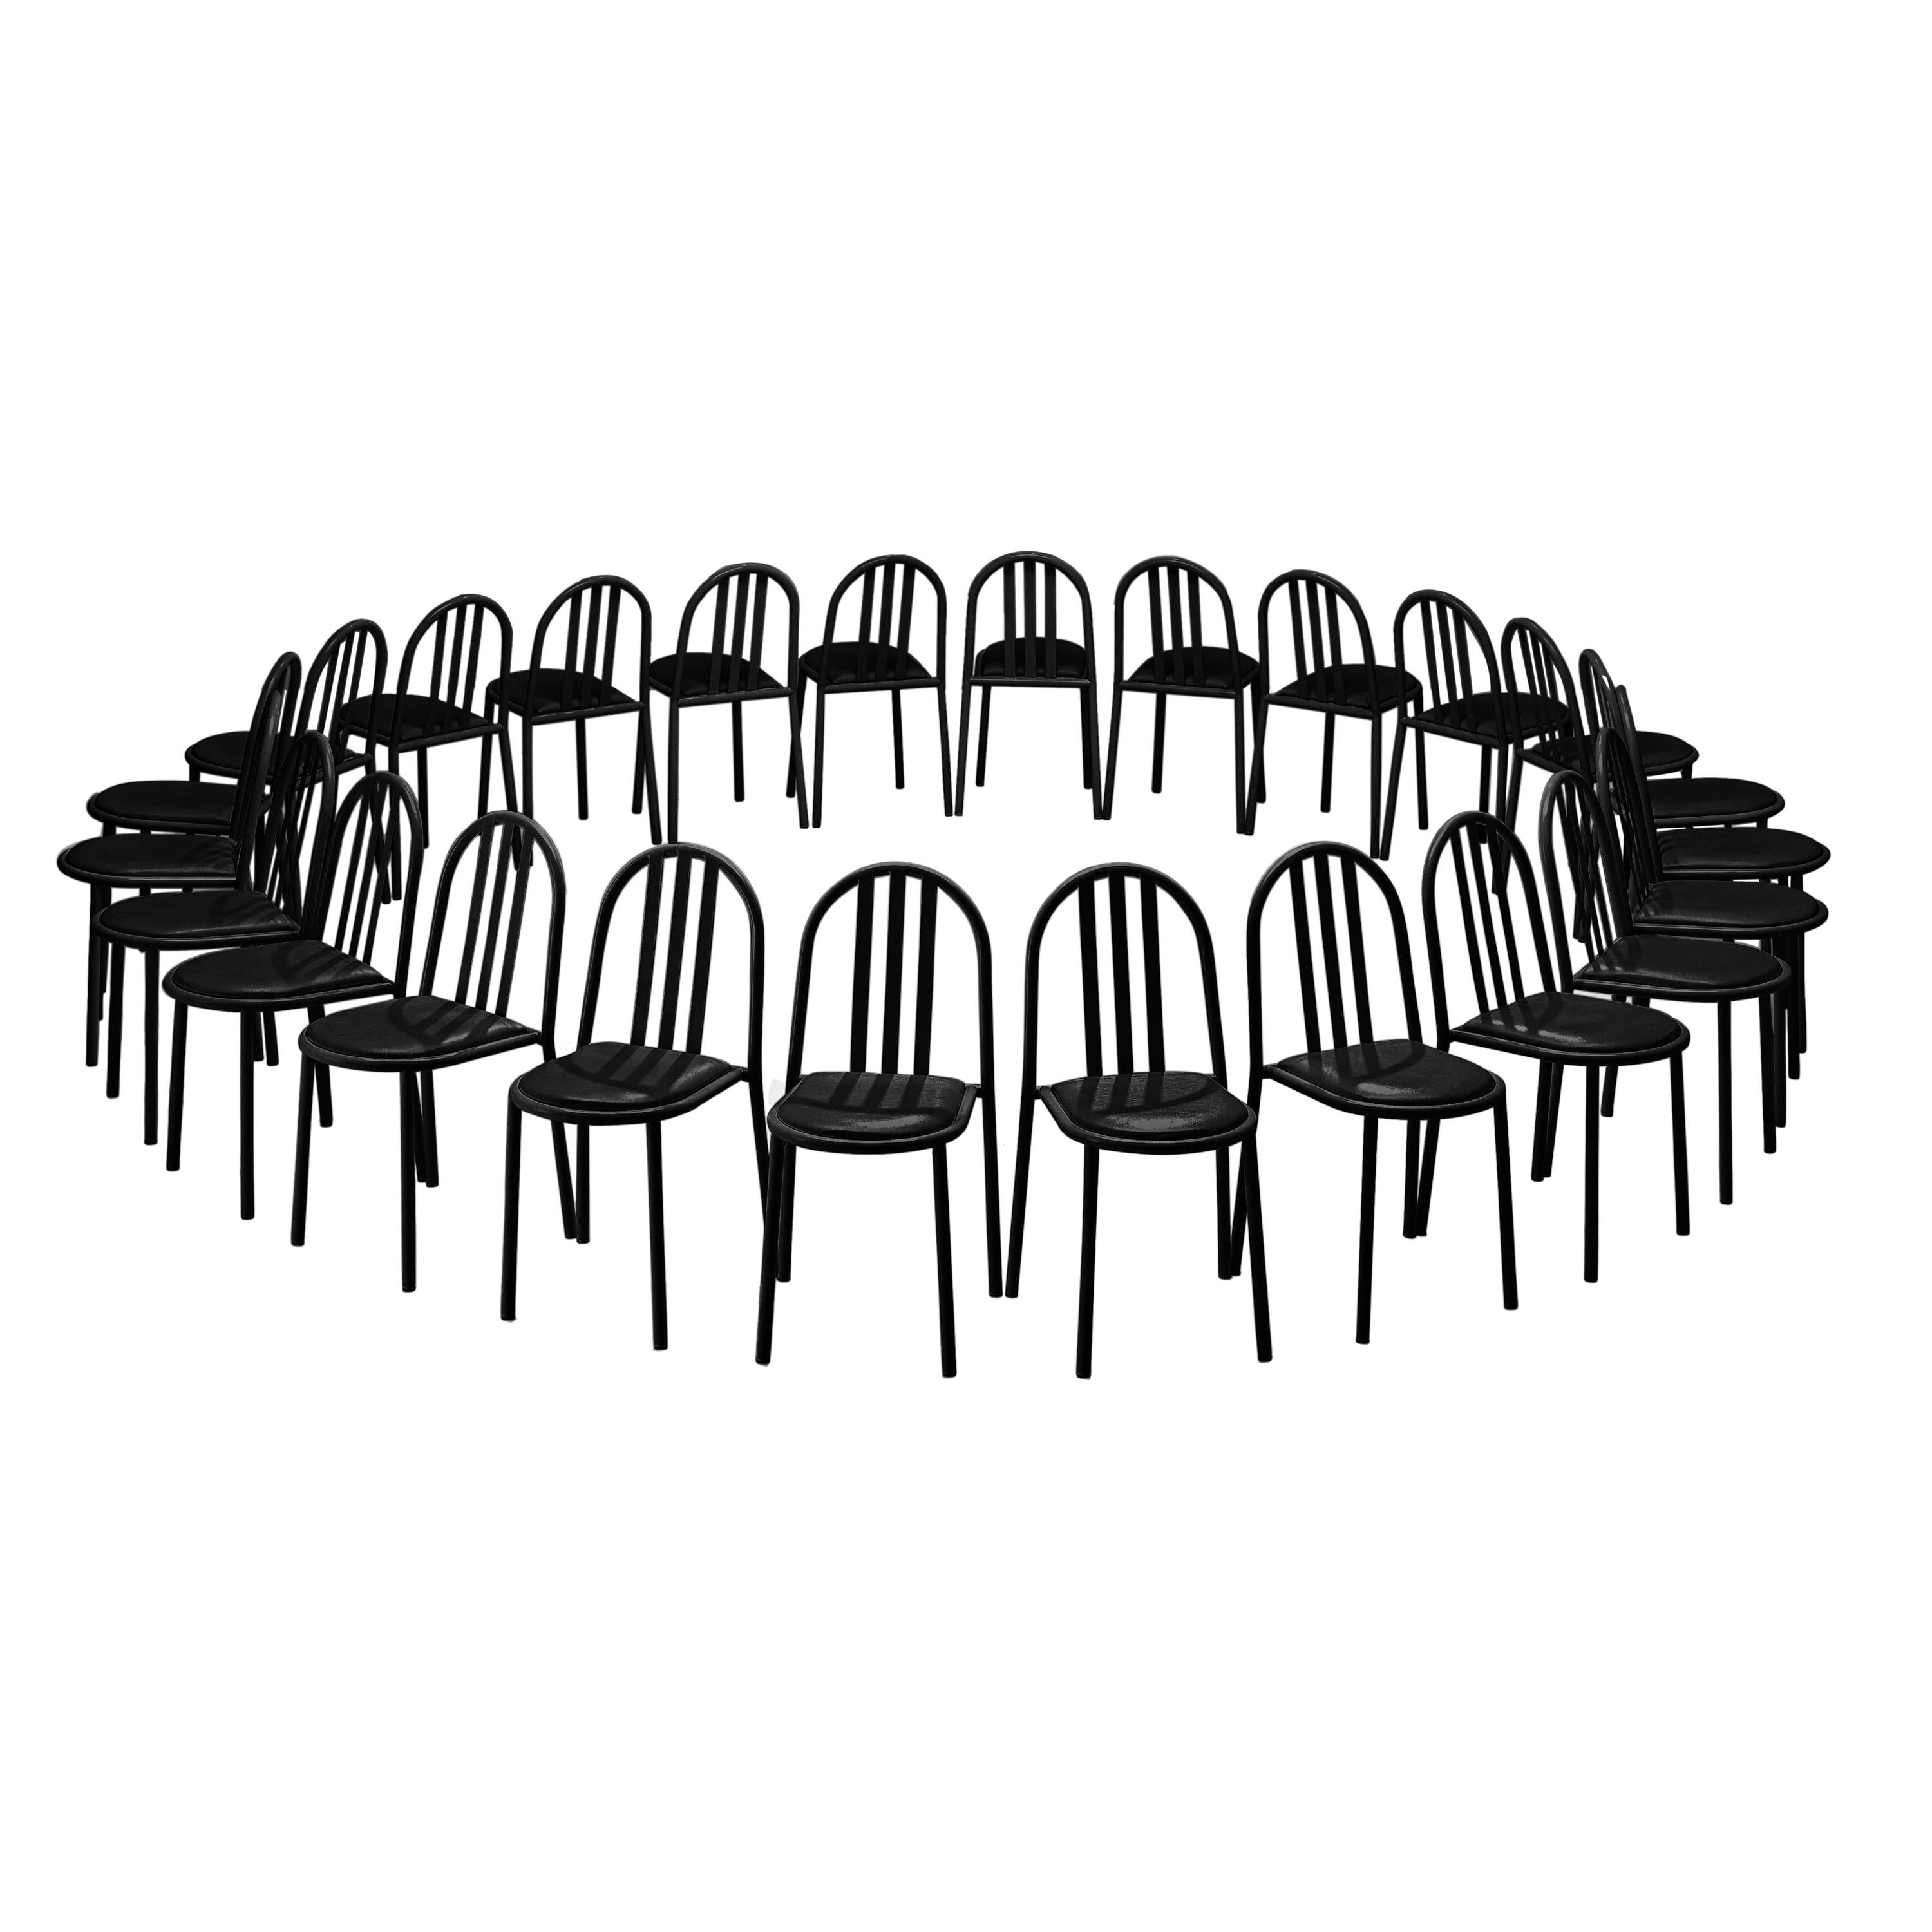 Large Set of Black Tubular Steel Chairs by Robert Mallet-Stevens